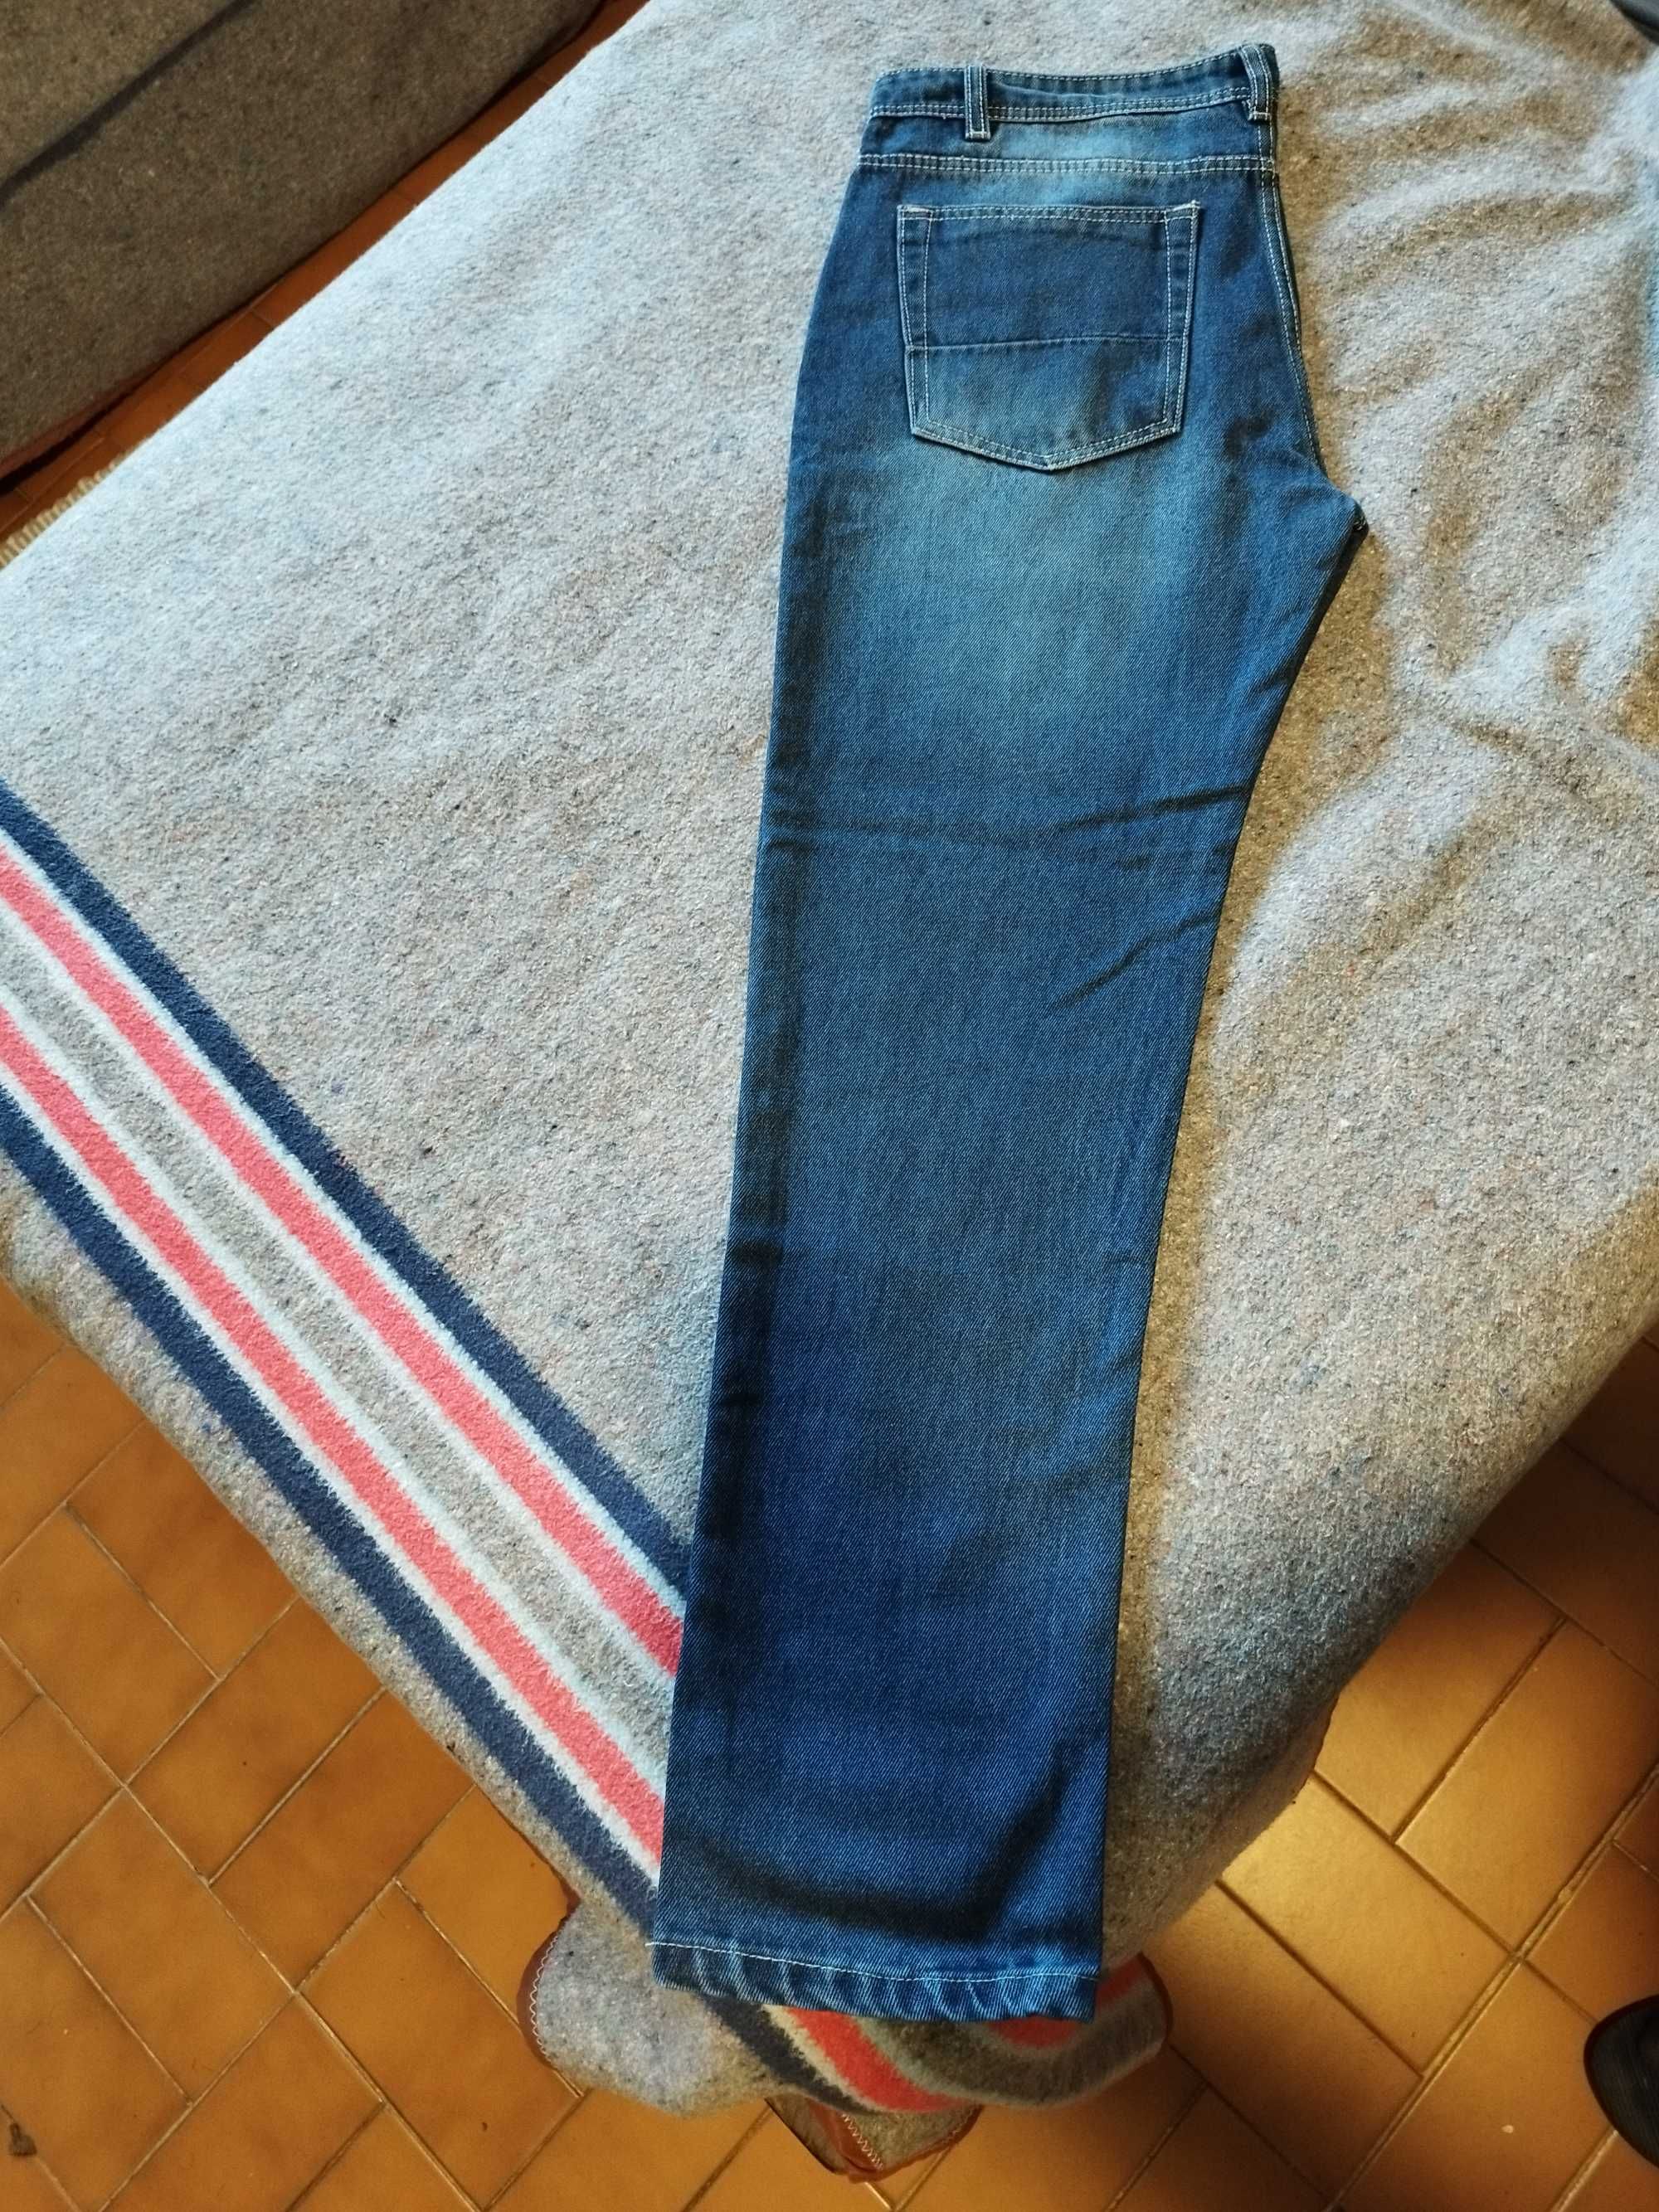 calça jeans masculina azul nova, tamanho 38